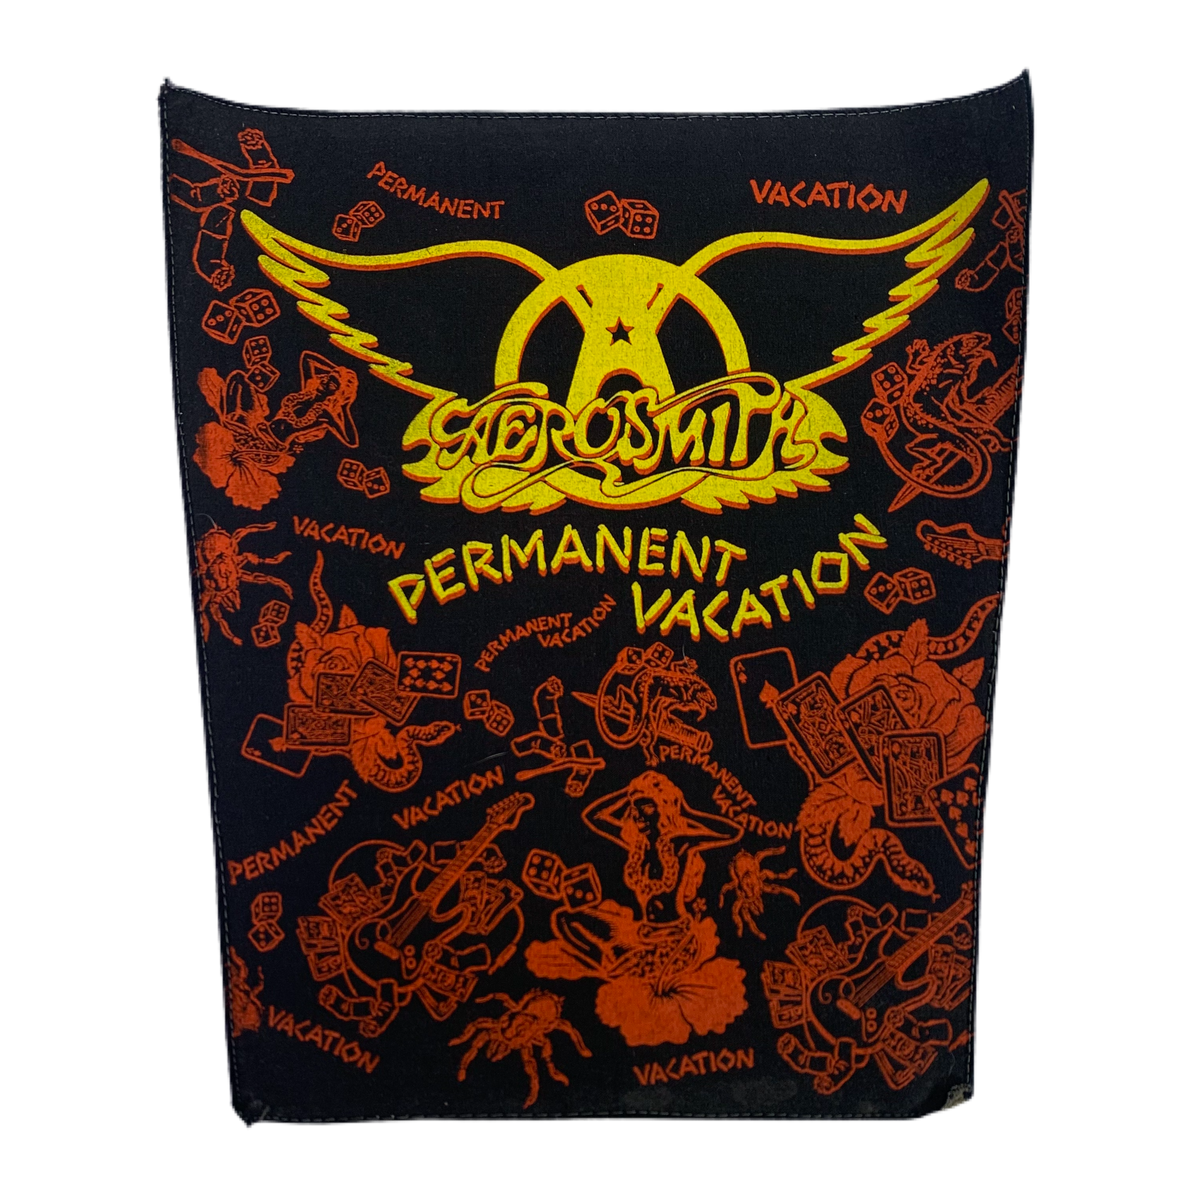 Vintage Aerosmith “Permanent Vacation” Back Patch